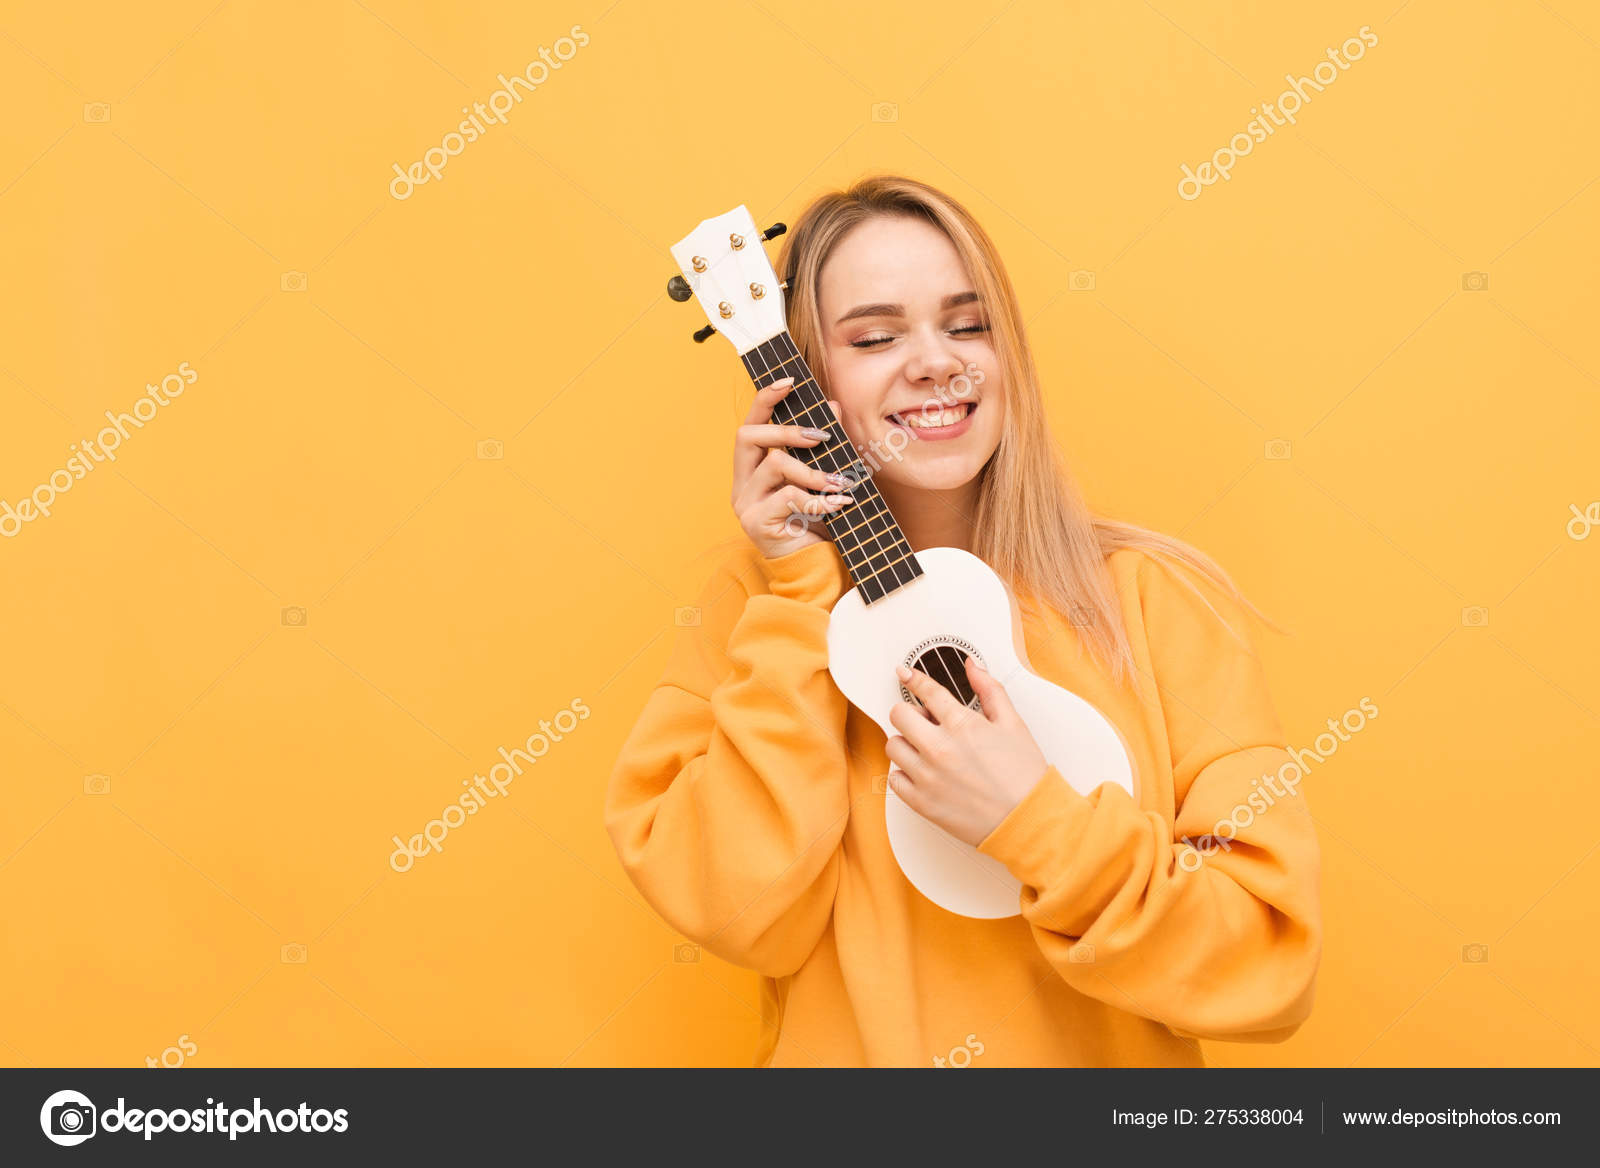 https://st4.depositphotos.com/11328482/27533/i/1600/depositphotos_275338004-stock-photo-cute-girl-hugs-ukulele-with.jpg